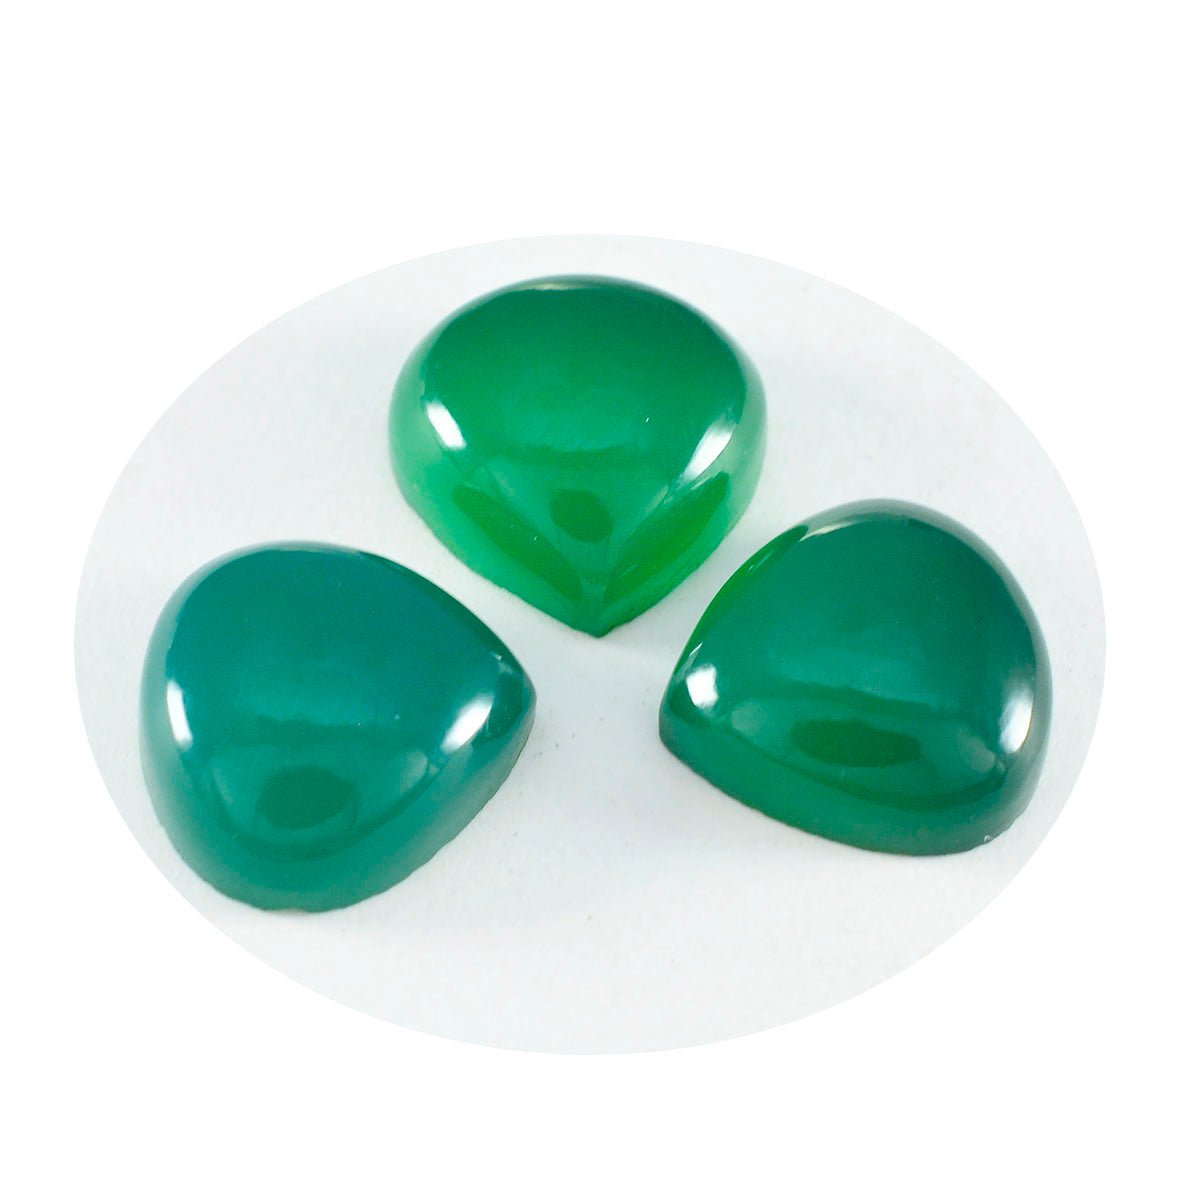 Riyogems 1PC Green Onyx Cabochon 13x13 mm Heart Shape superb Quality Loose Gems